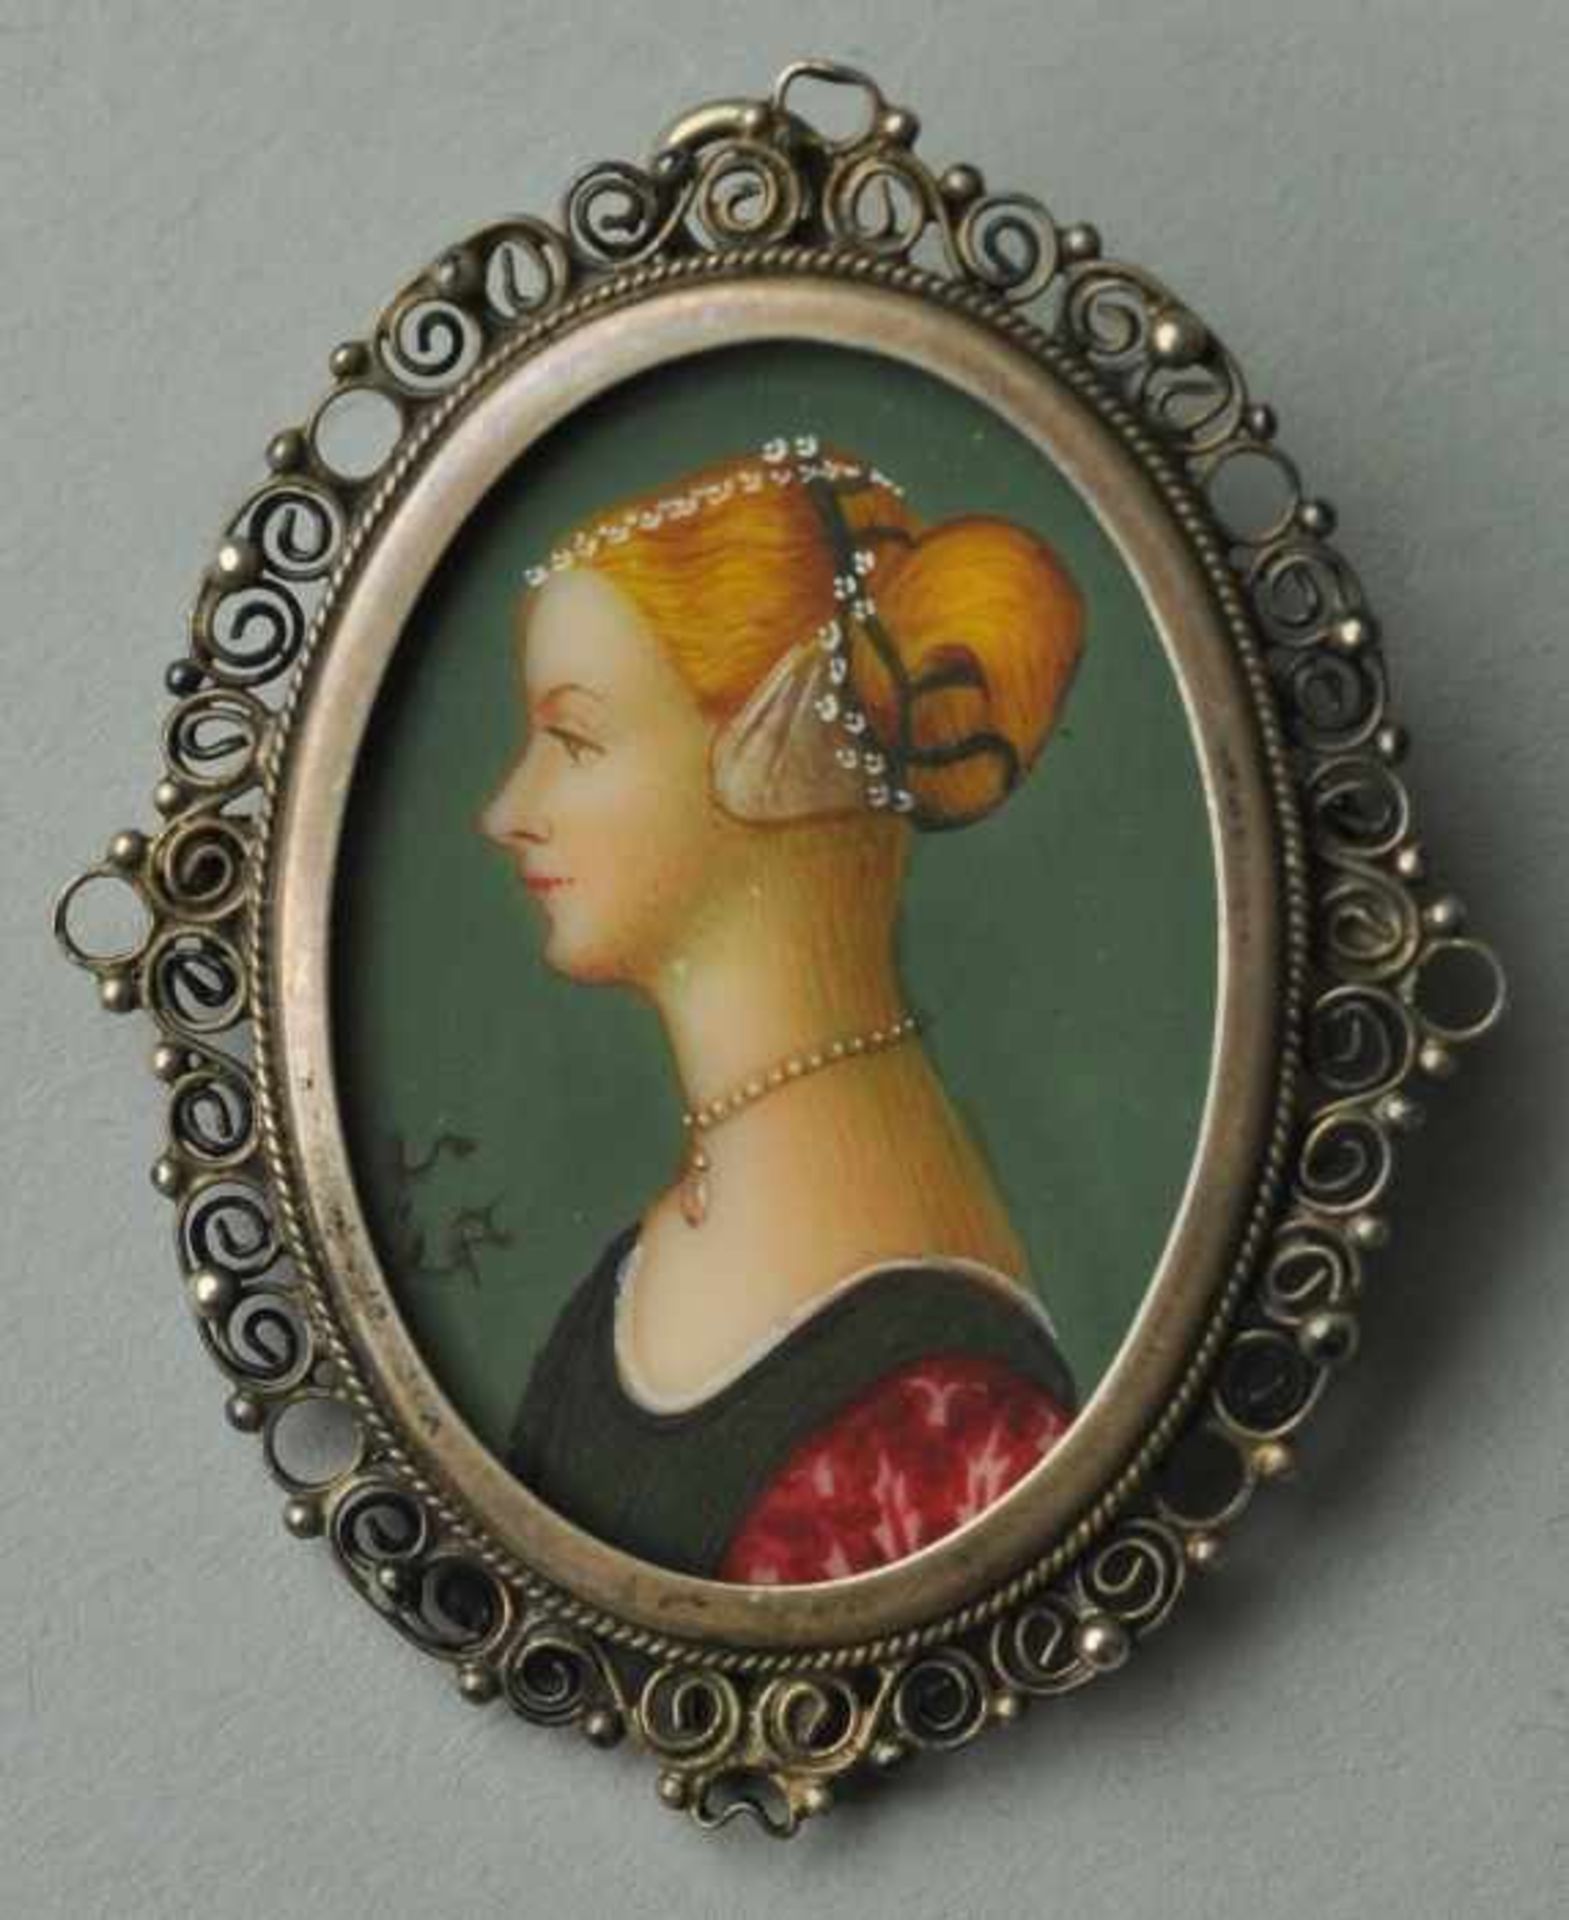 ANHÄNGER/BROSCHE ovales Damenportrait im Profil, farbige Miniaturmalerei nach Piero del